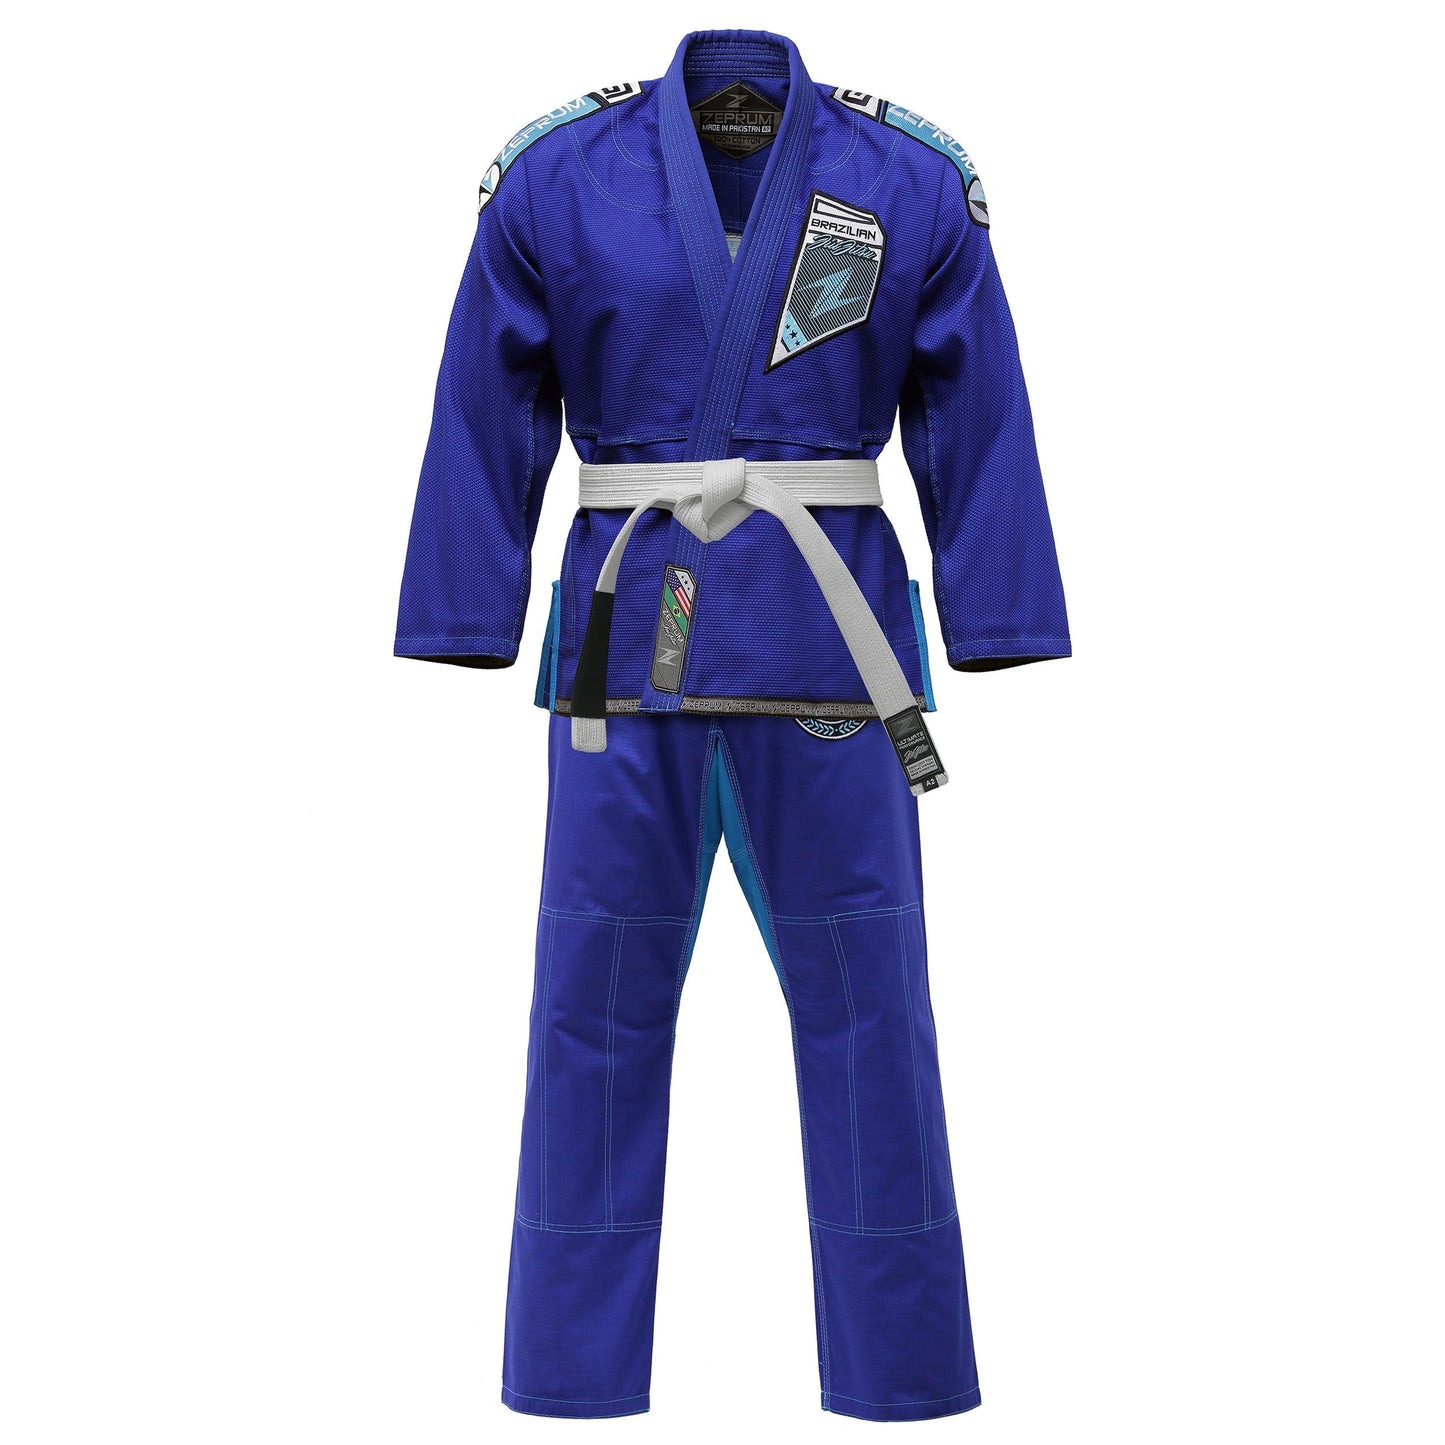 BJJ BOY - Pro Competition Jiu Jitsu Kimono Gi Uniform For Men Adult Athletes